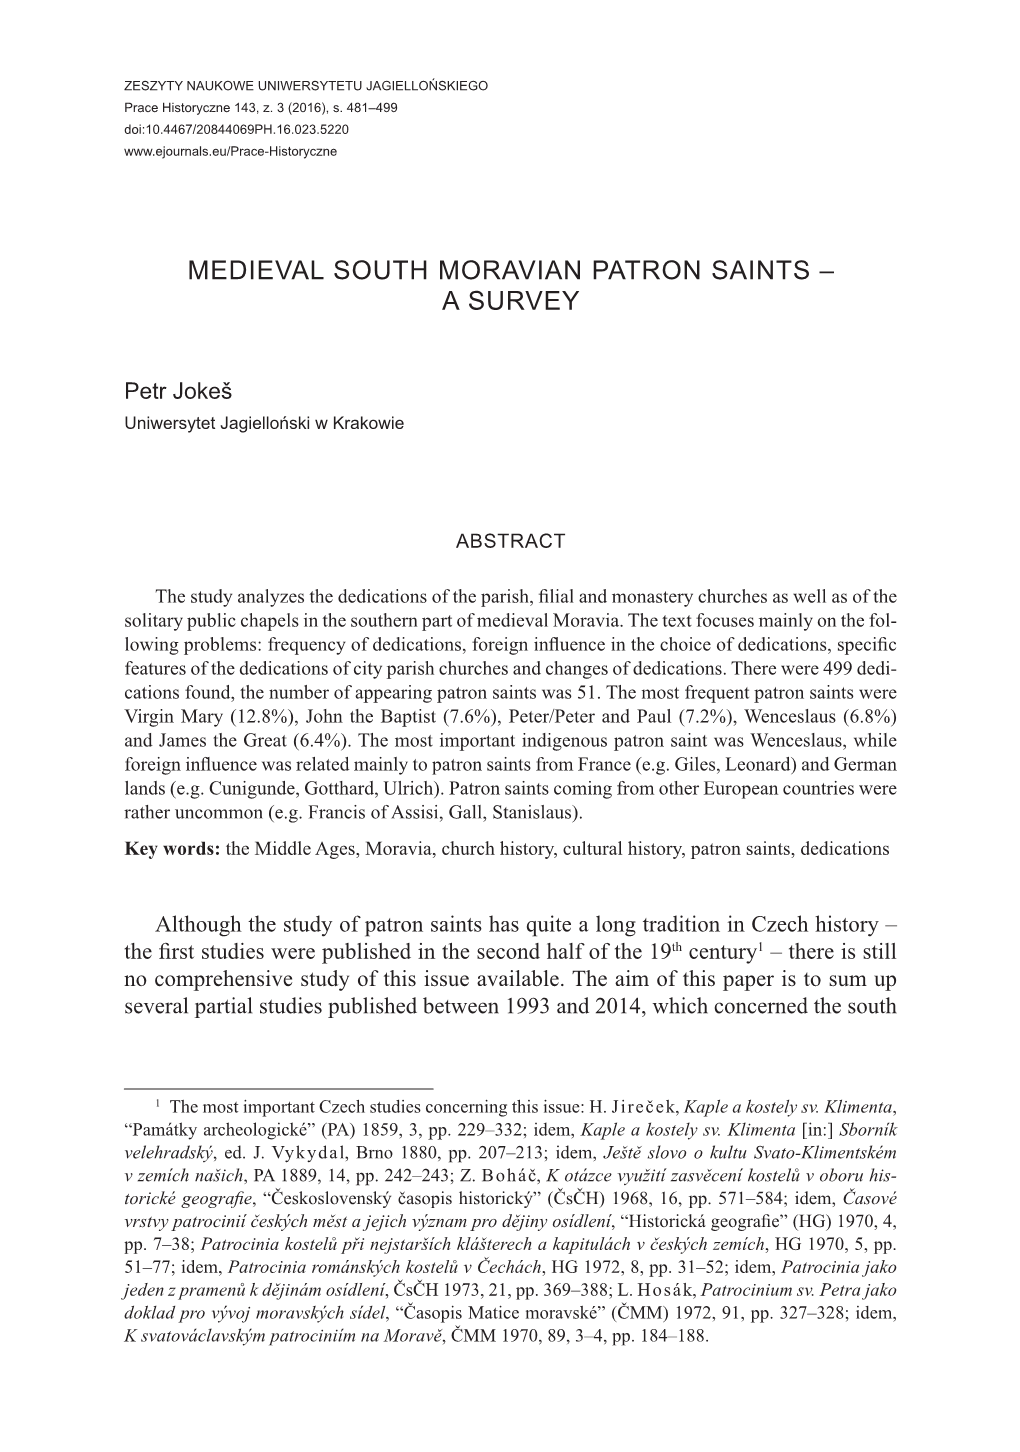 Medieval South Moravian Patron Saints – a Survey